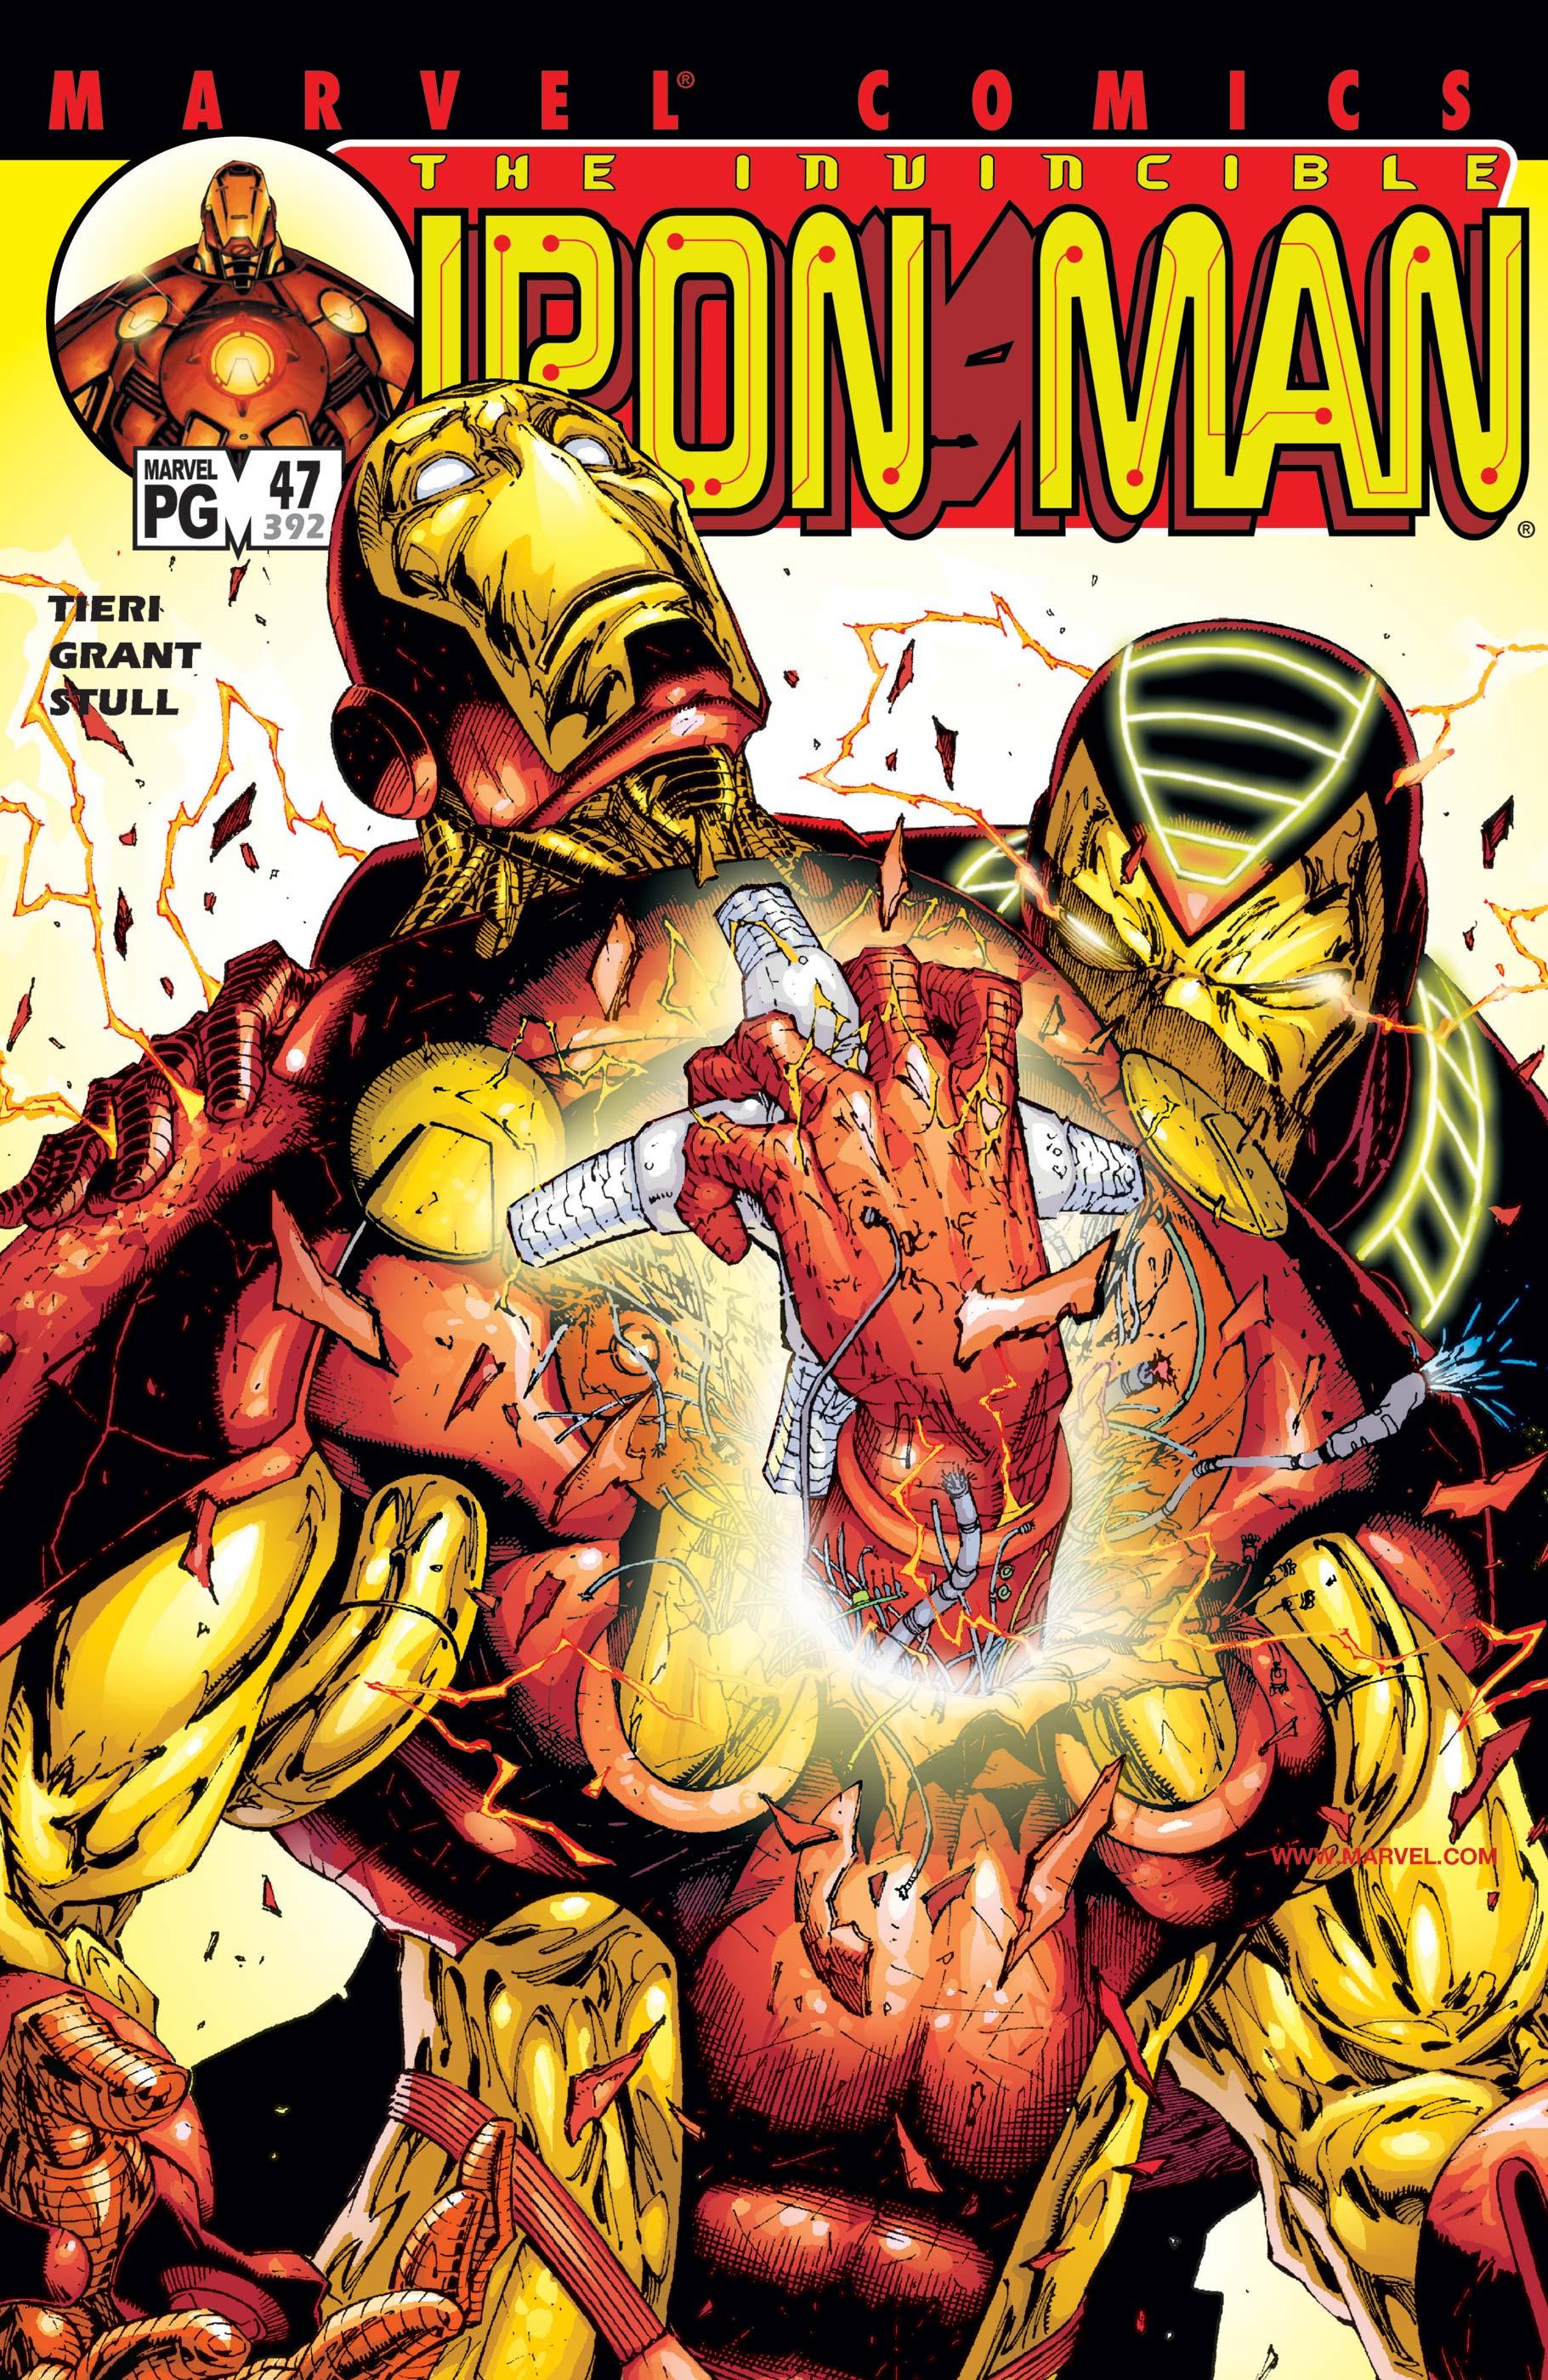 IRON MAN #46#47 - MARVEL COMICS (2001)